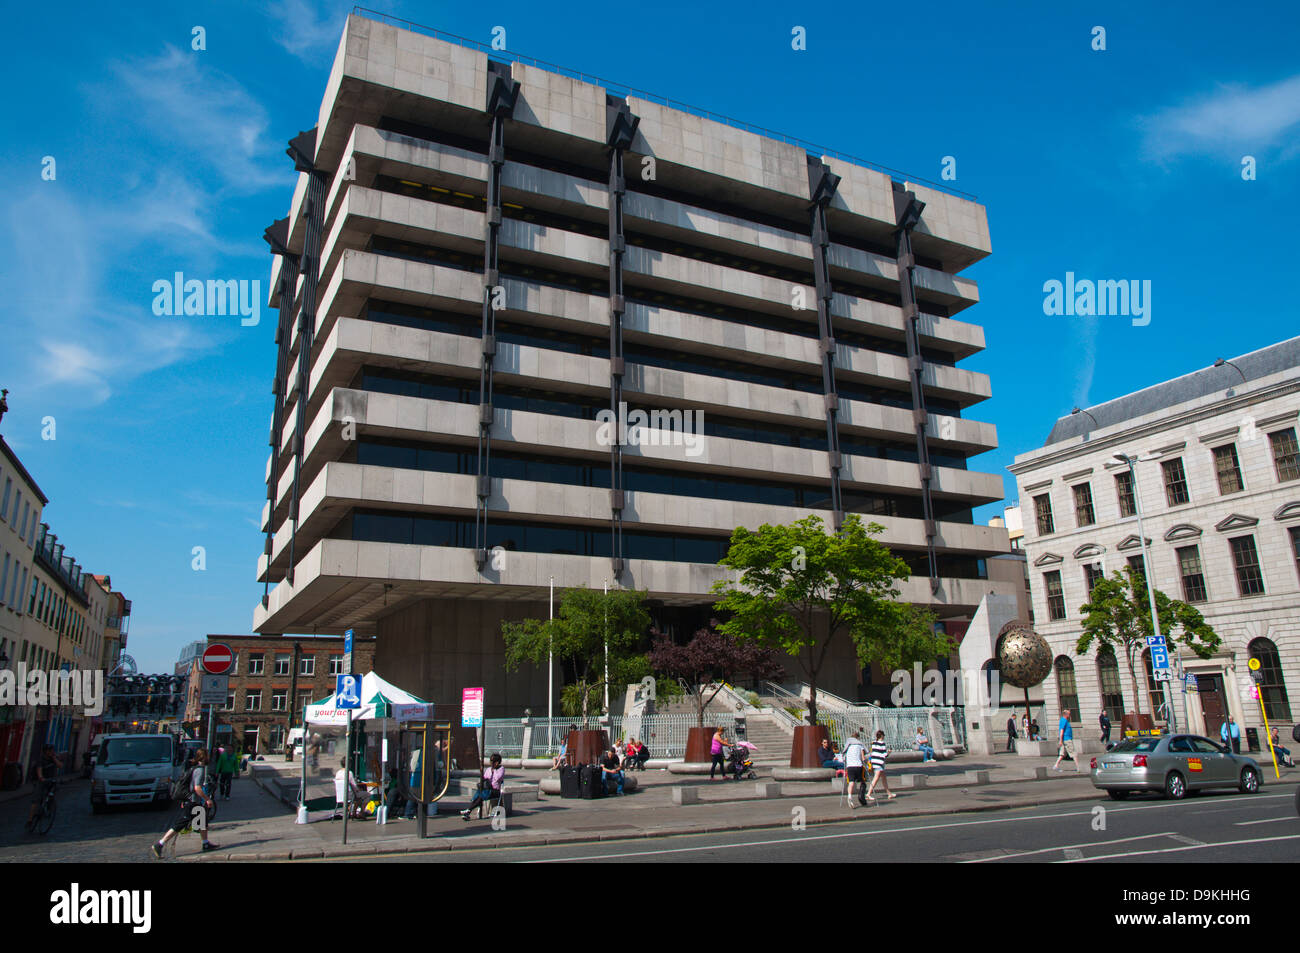 Brutalistischen Stil Zentralbank Gebäude entlang Dame Street Dublin Irland Mitteleuropa Stockfoto